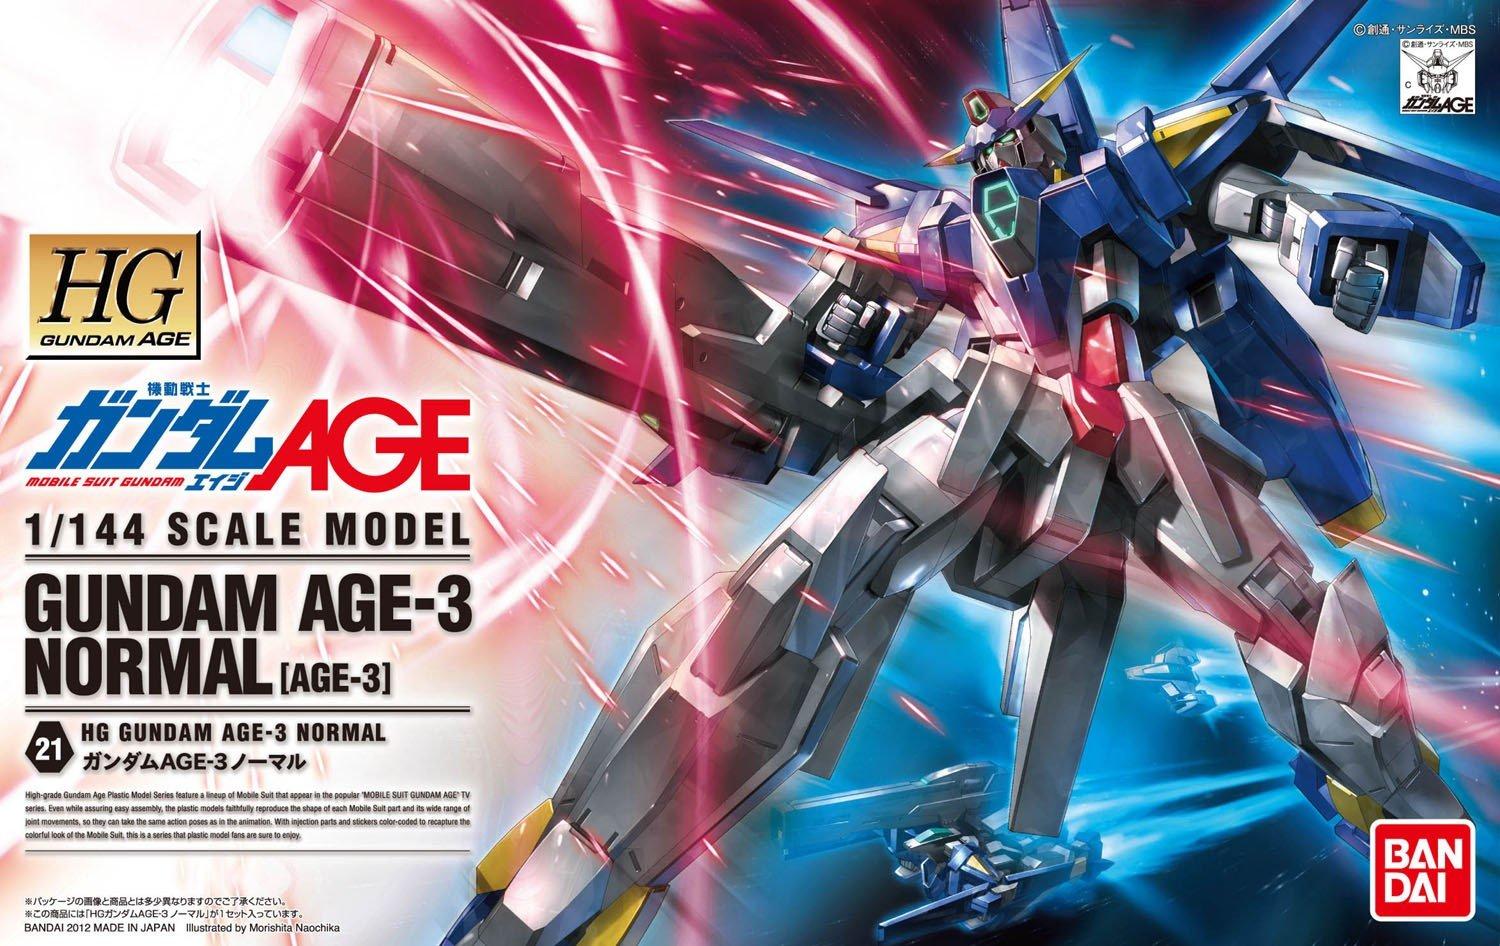 GUNDAM GUY: HG 1 144 Gundam AGE 3 Normal Wallpaper Size Box